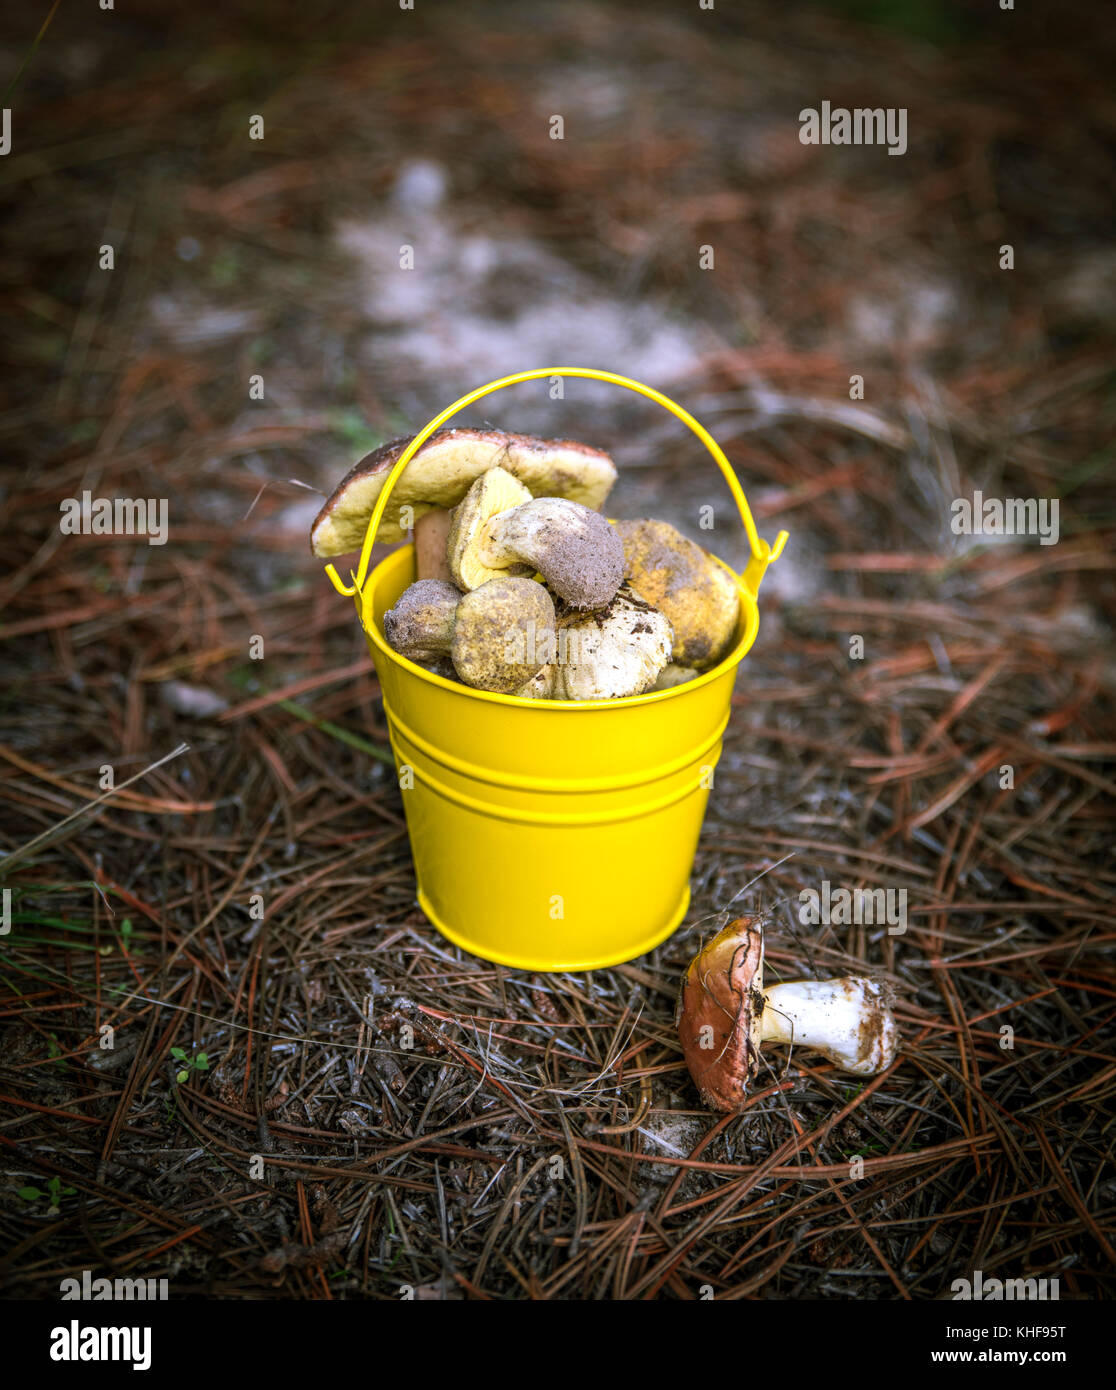 edible wild mushrooms in a yellow bucket, top view Stock Photo